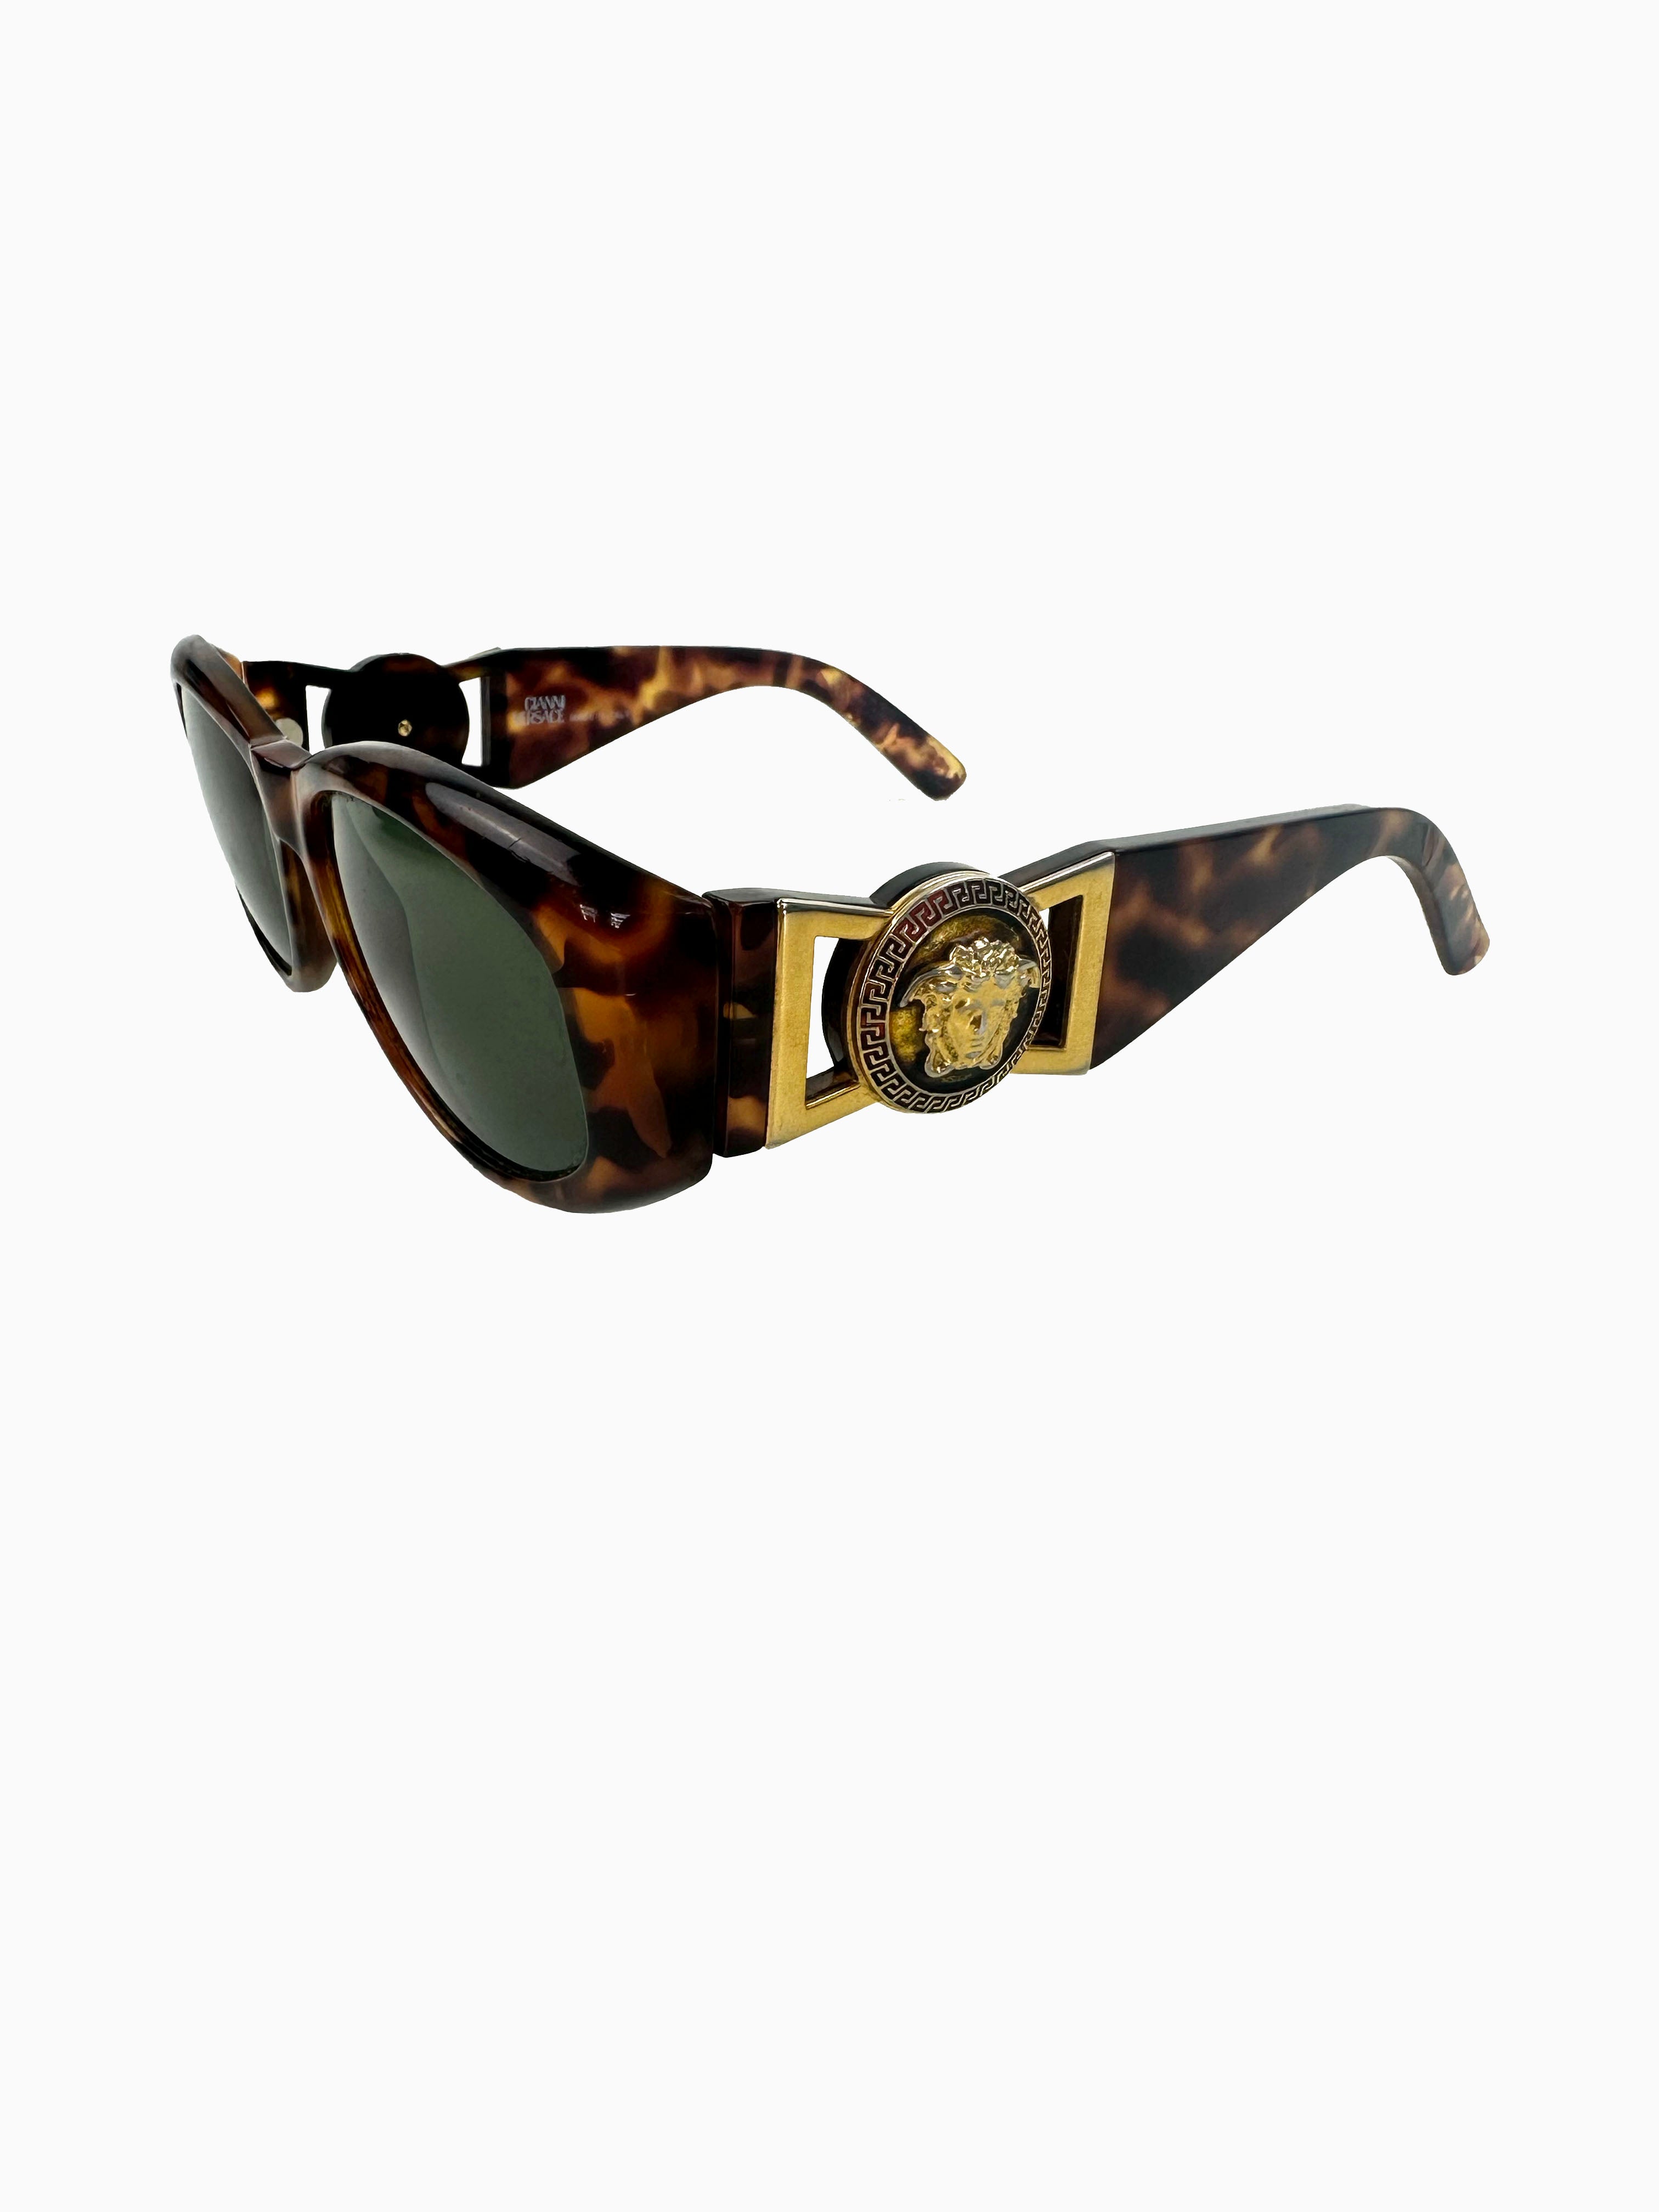 Gianni Versace Tortoise Medusa Sunglasses 90's